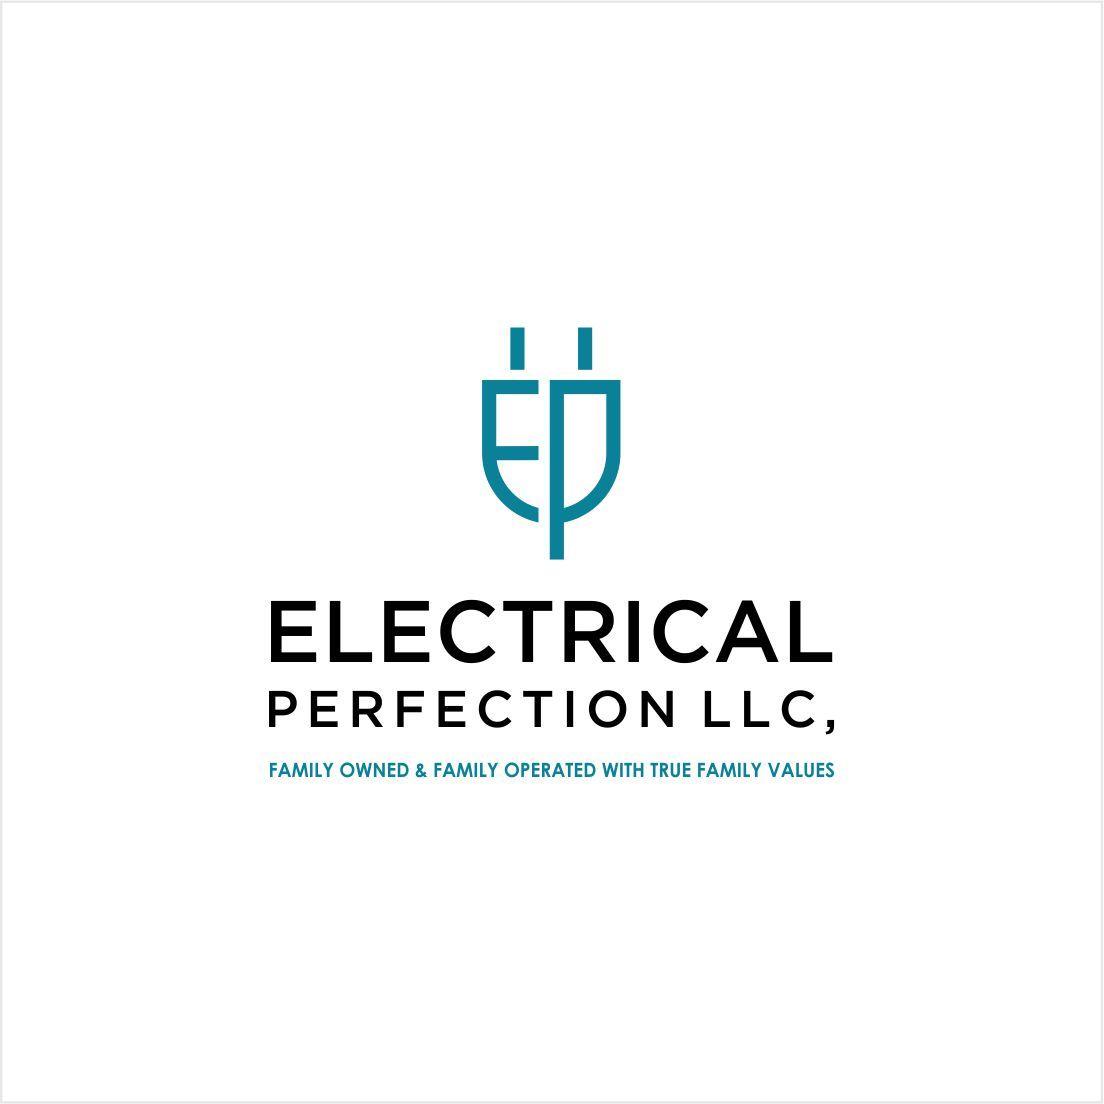 Electric Plug Logo - 60 Best Electrical Logos